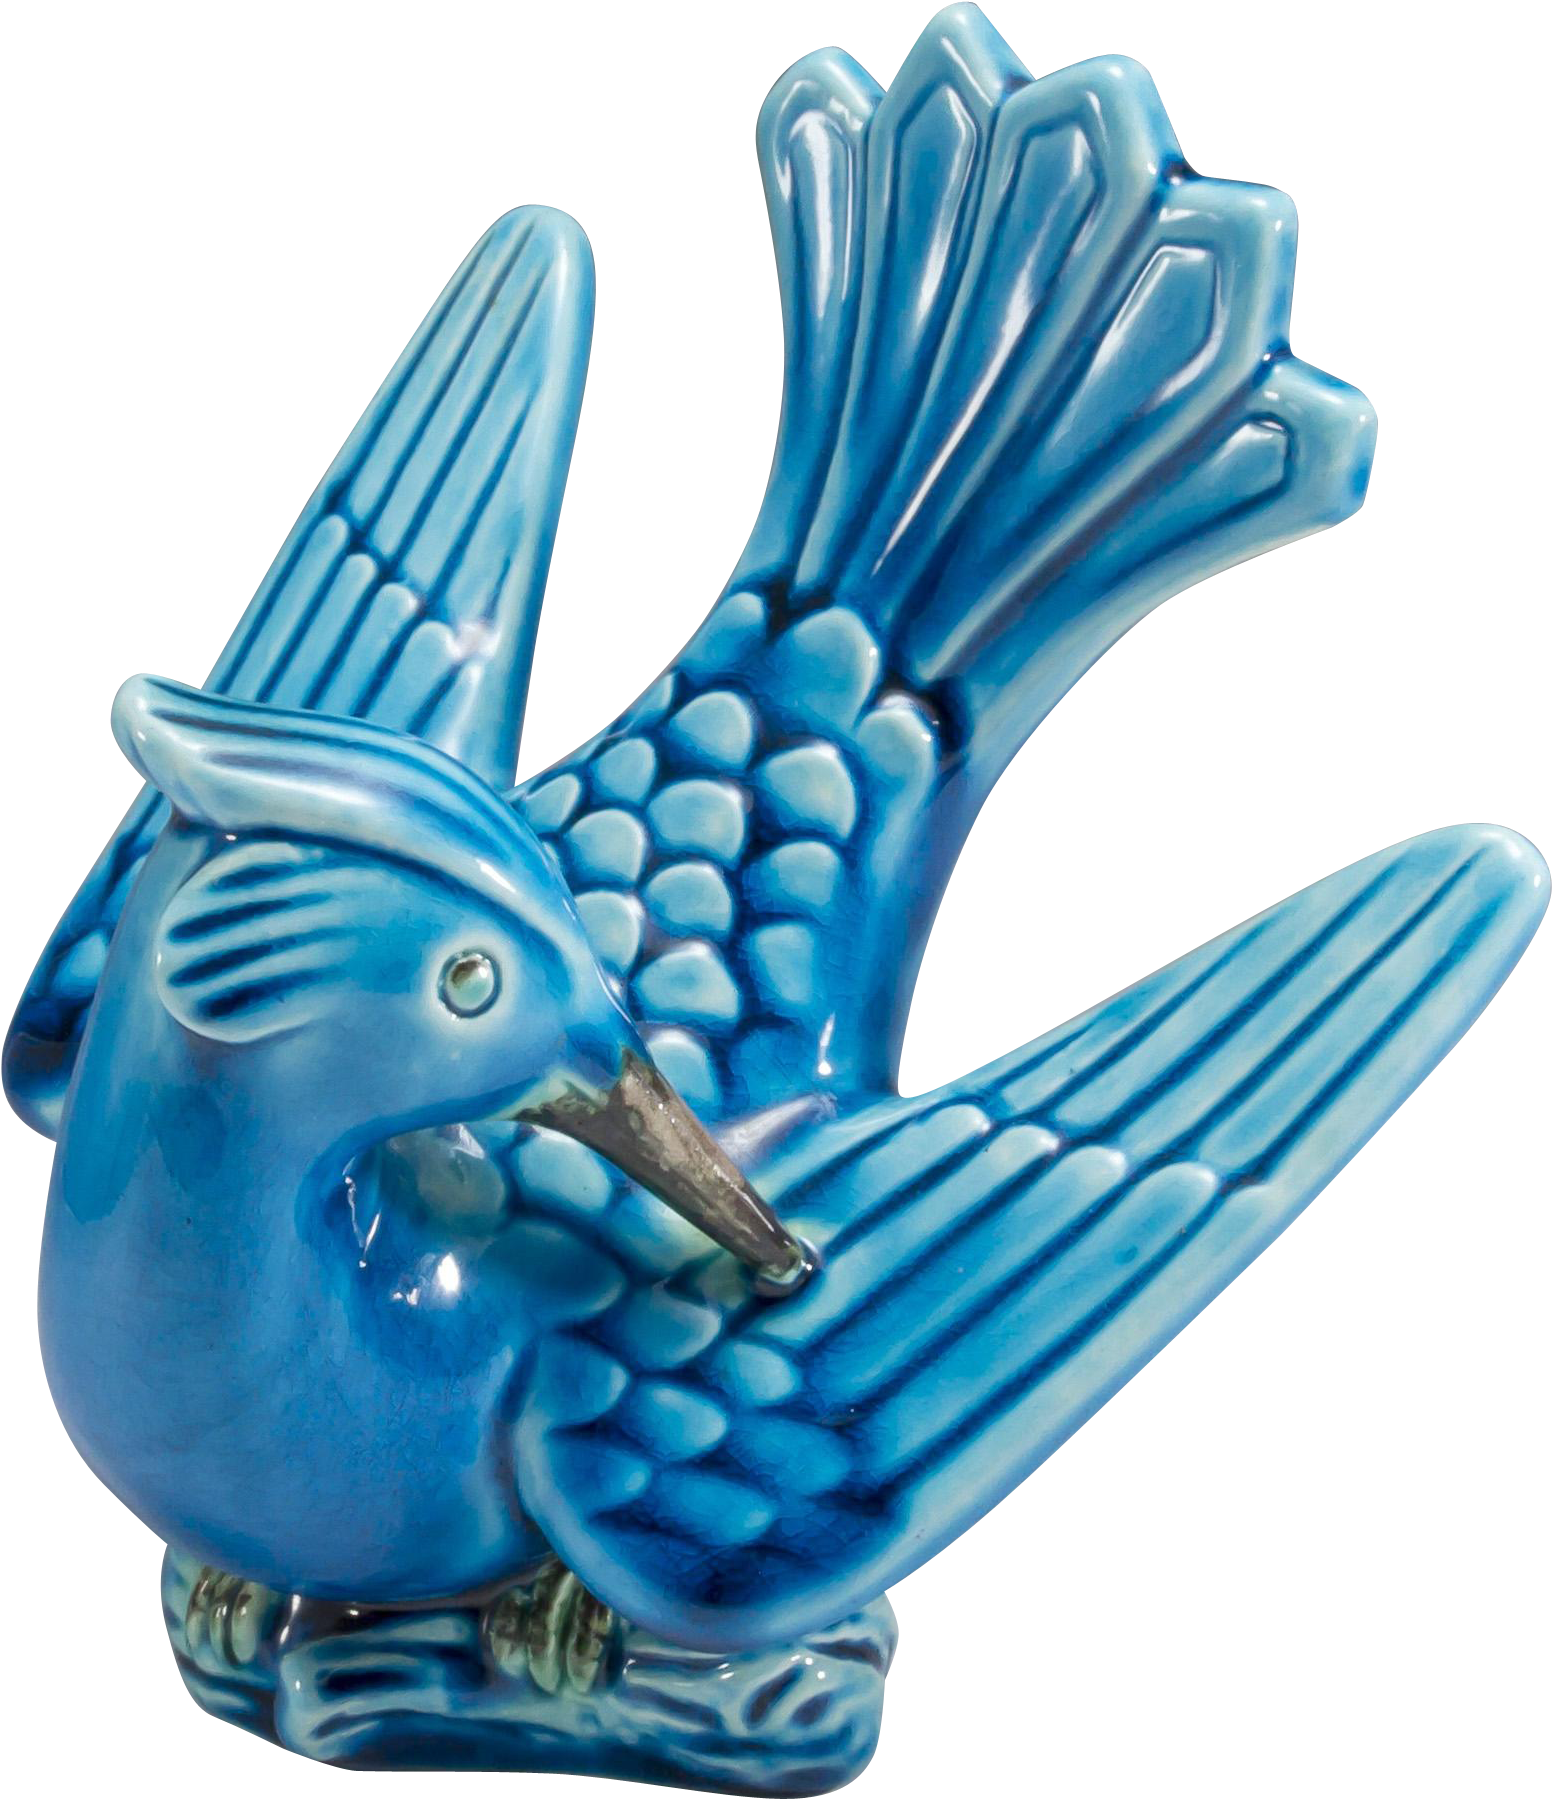 Blue Bird Figurine Gunnar Nylund Rorstrand - Gunnar Nylund (1798x1798)